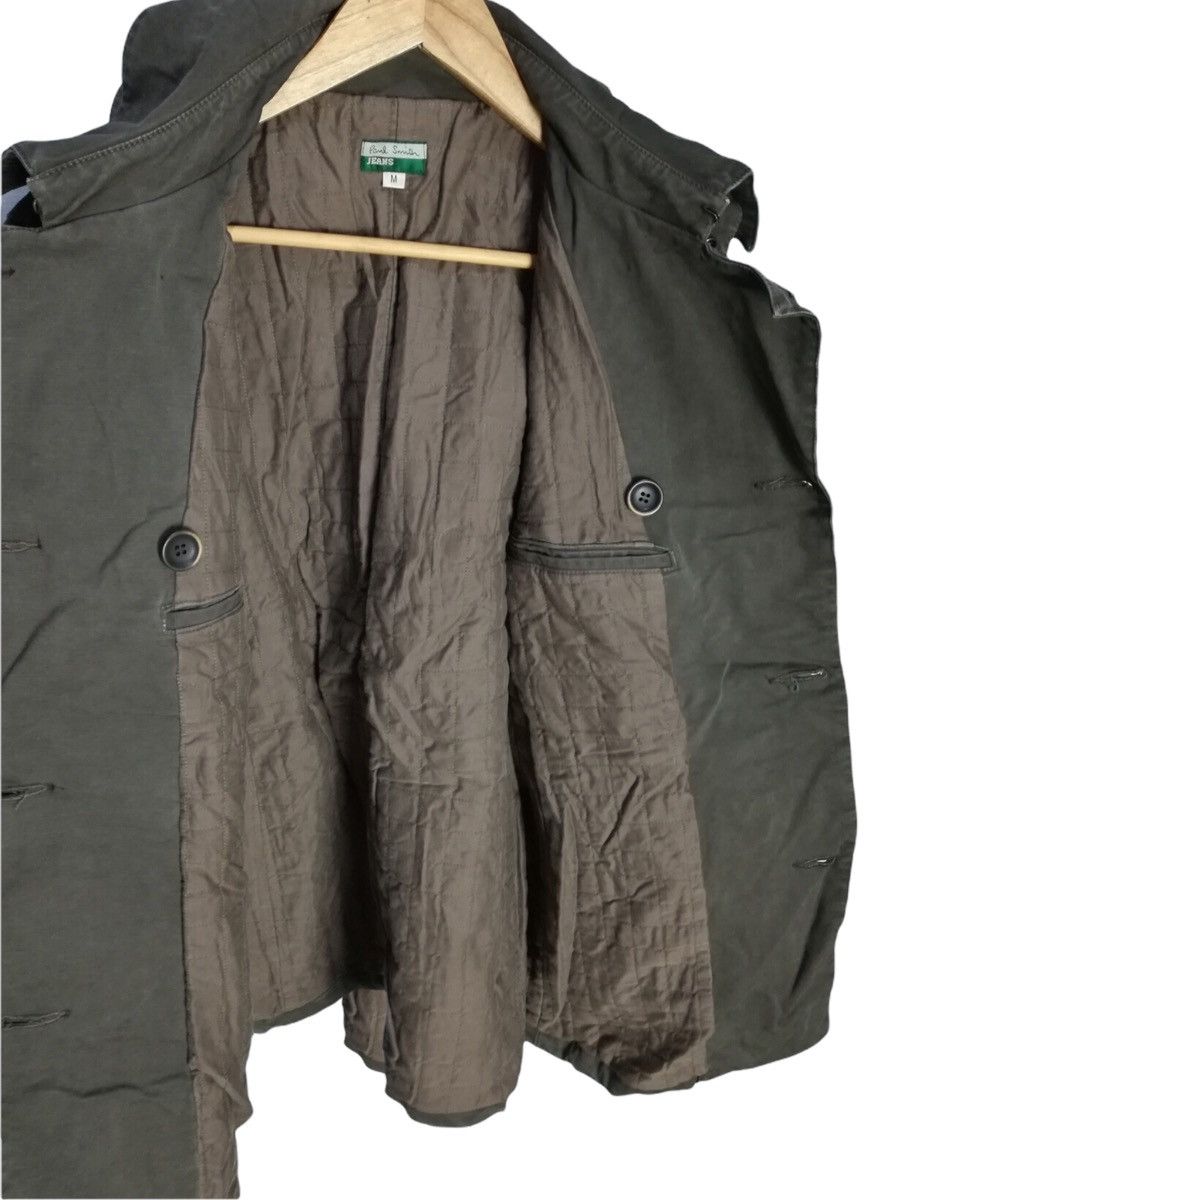 paul smith military cotton m65 jacket - 4